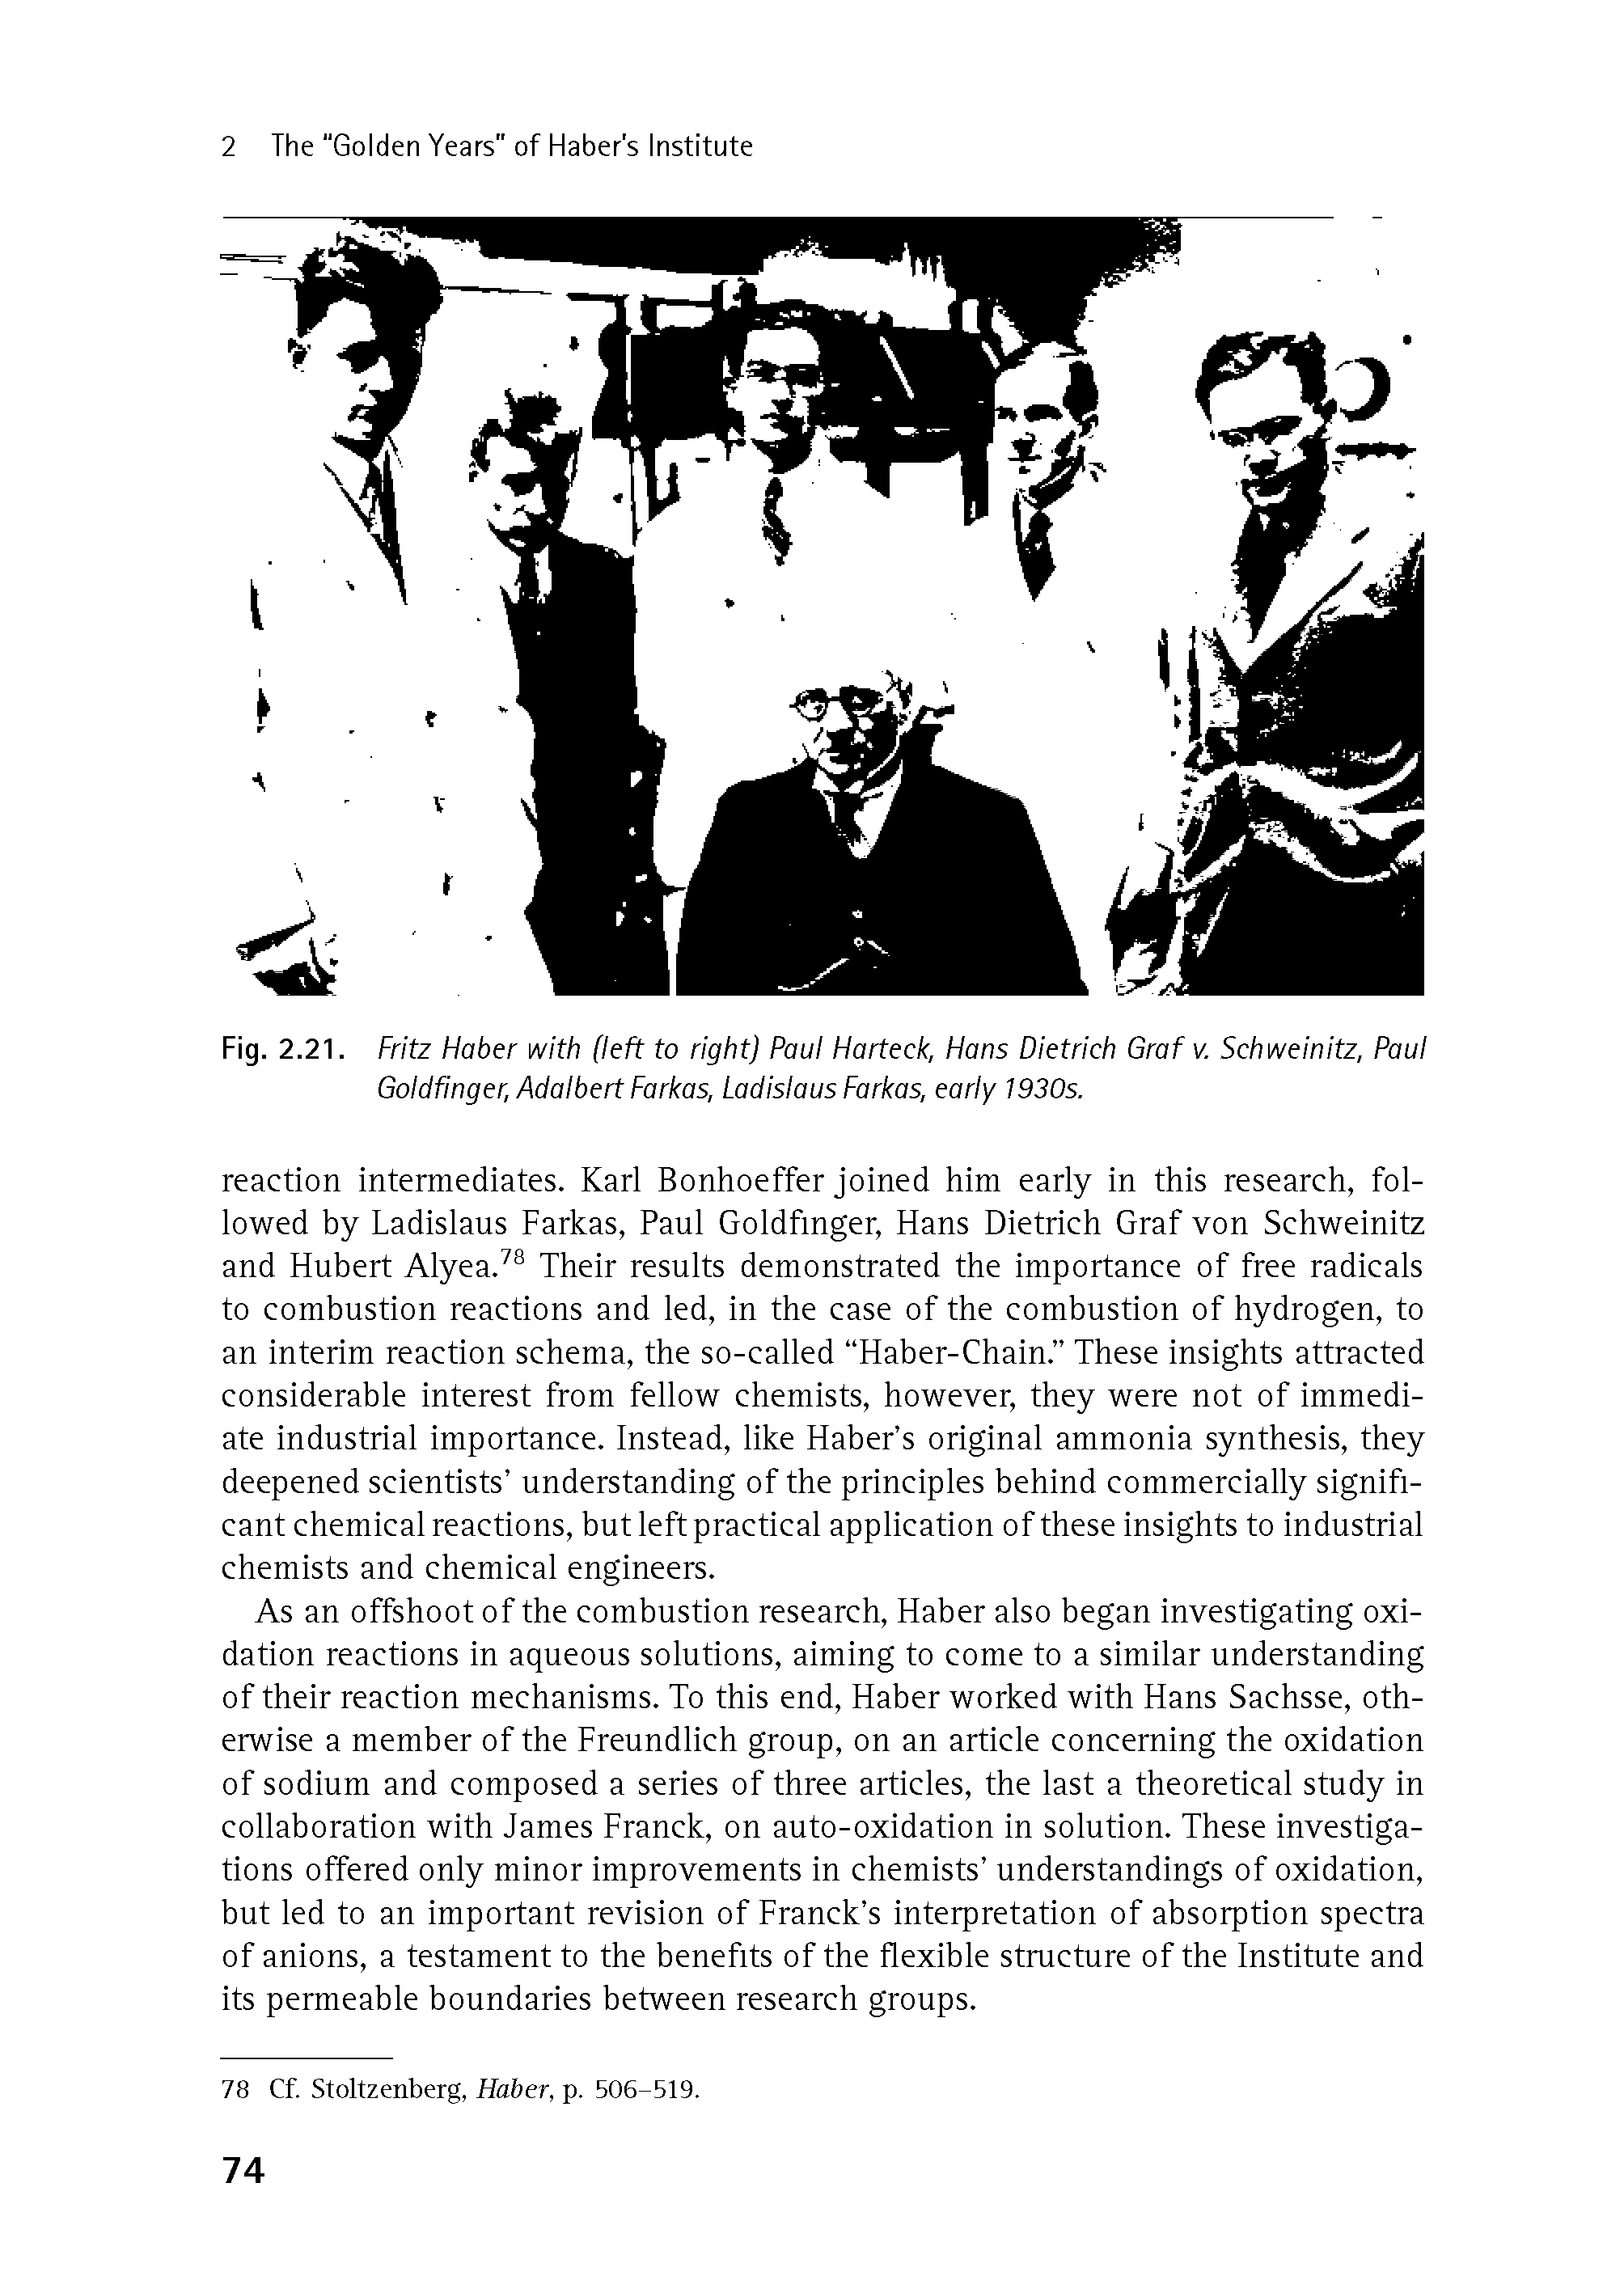 Fig. 2.21. Fritz Fiaber with (left to right) Paul Fiarteck, Flans Dietrich Graf v. Schweinitz, Paul Goldfinger, Adalbert Farkas, Ladislaus Farkas, early 1930s.